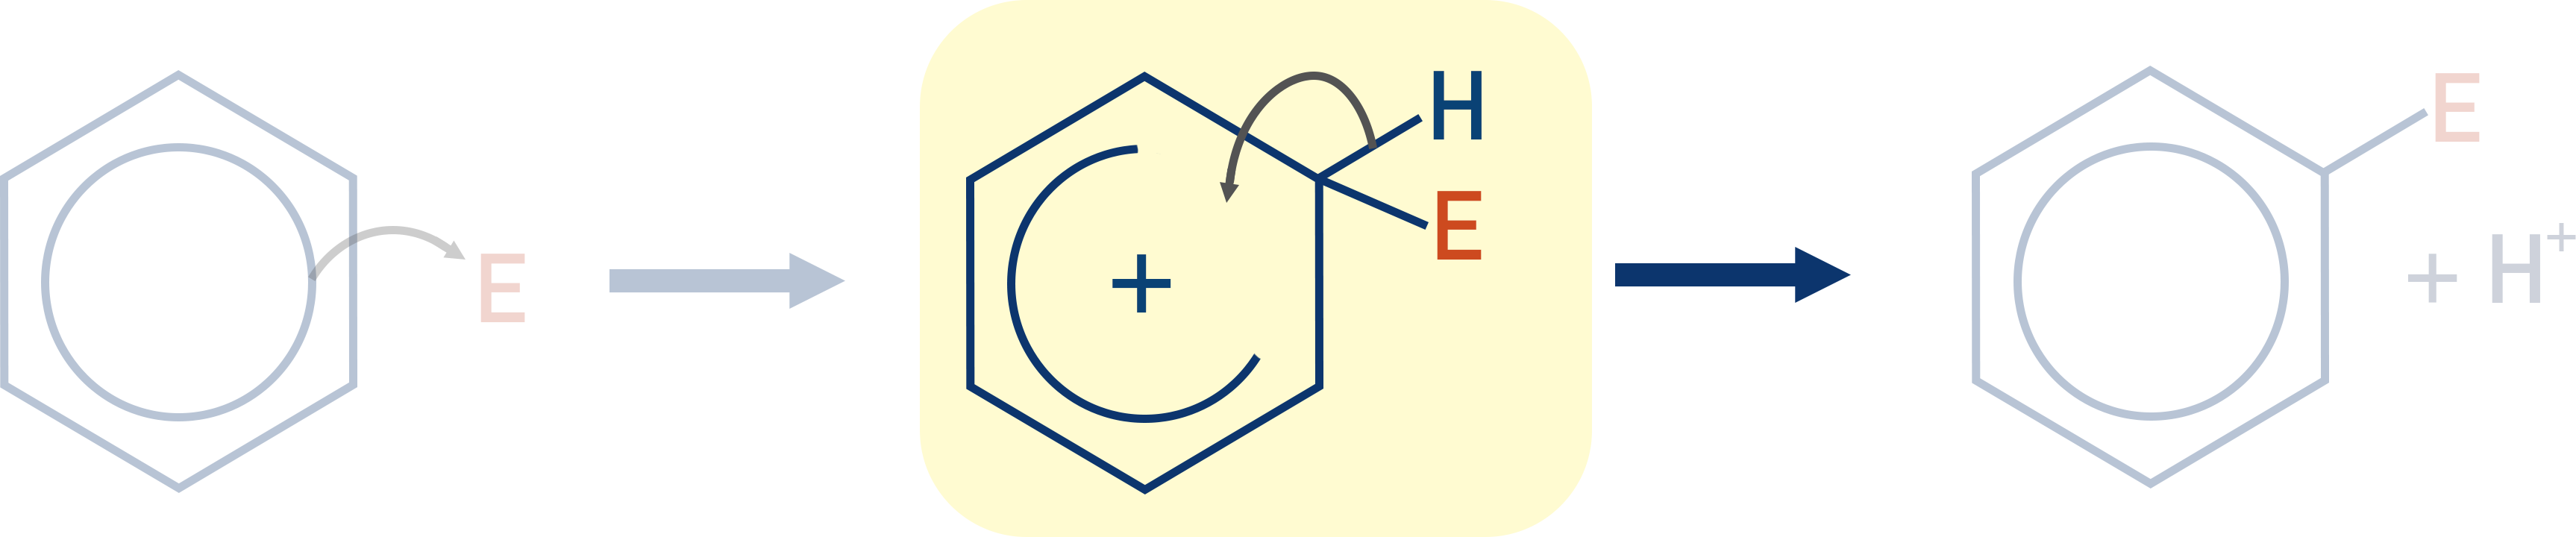 electrophilic substiution benzene second step mechanism